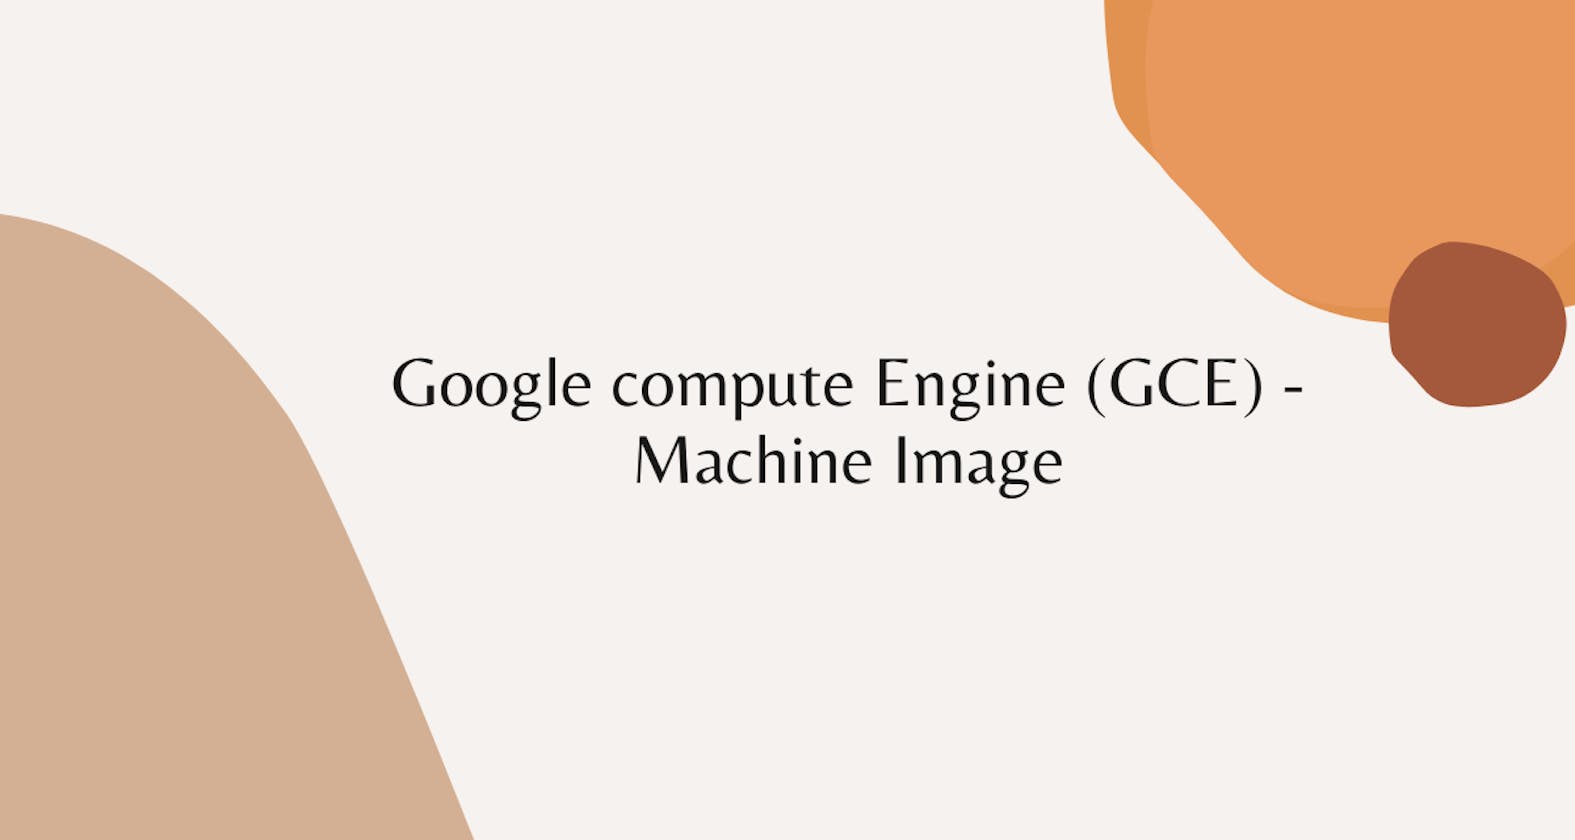 Google compute Engine (GCE) - Machine Image